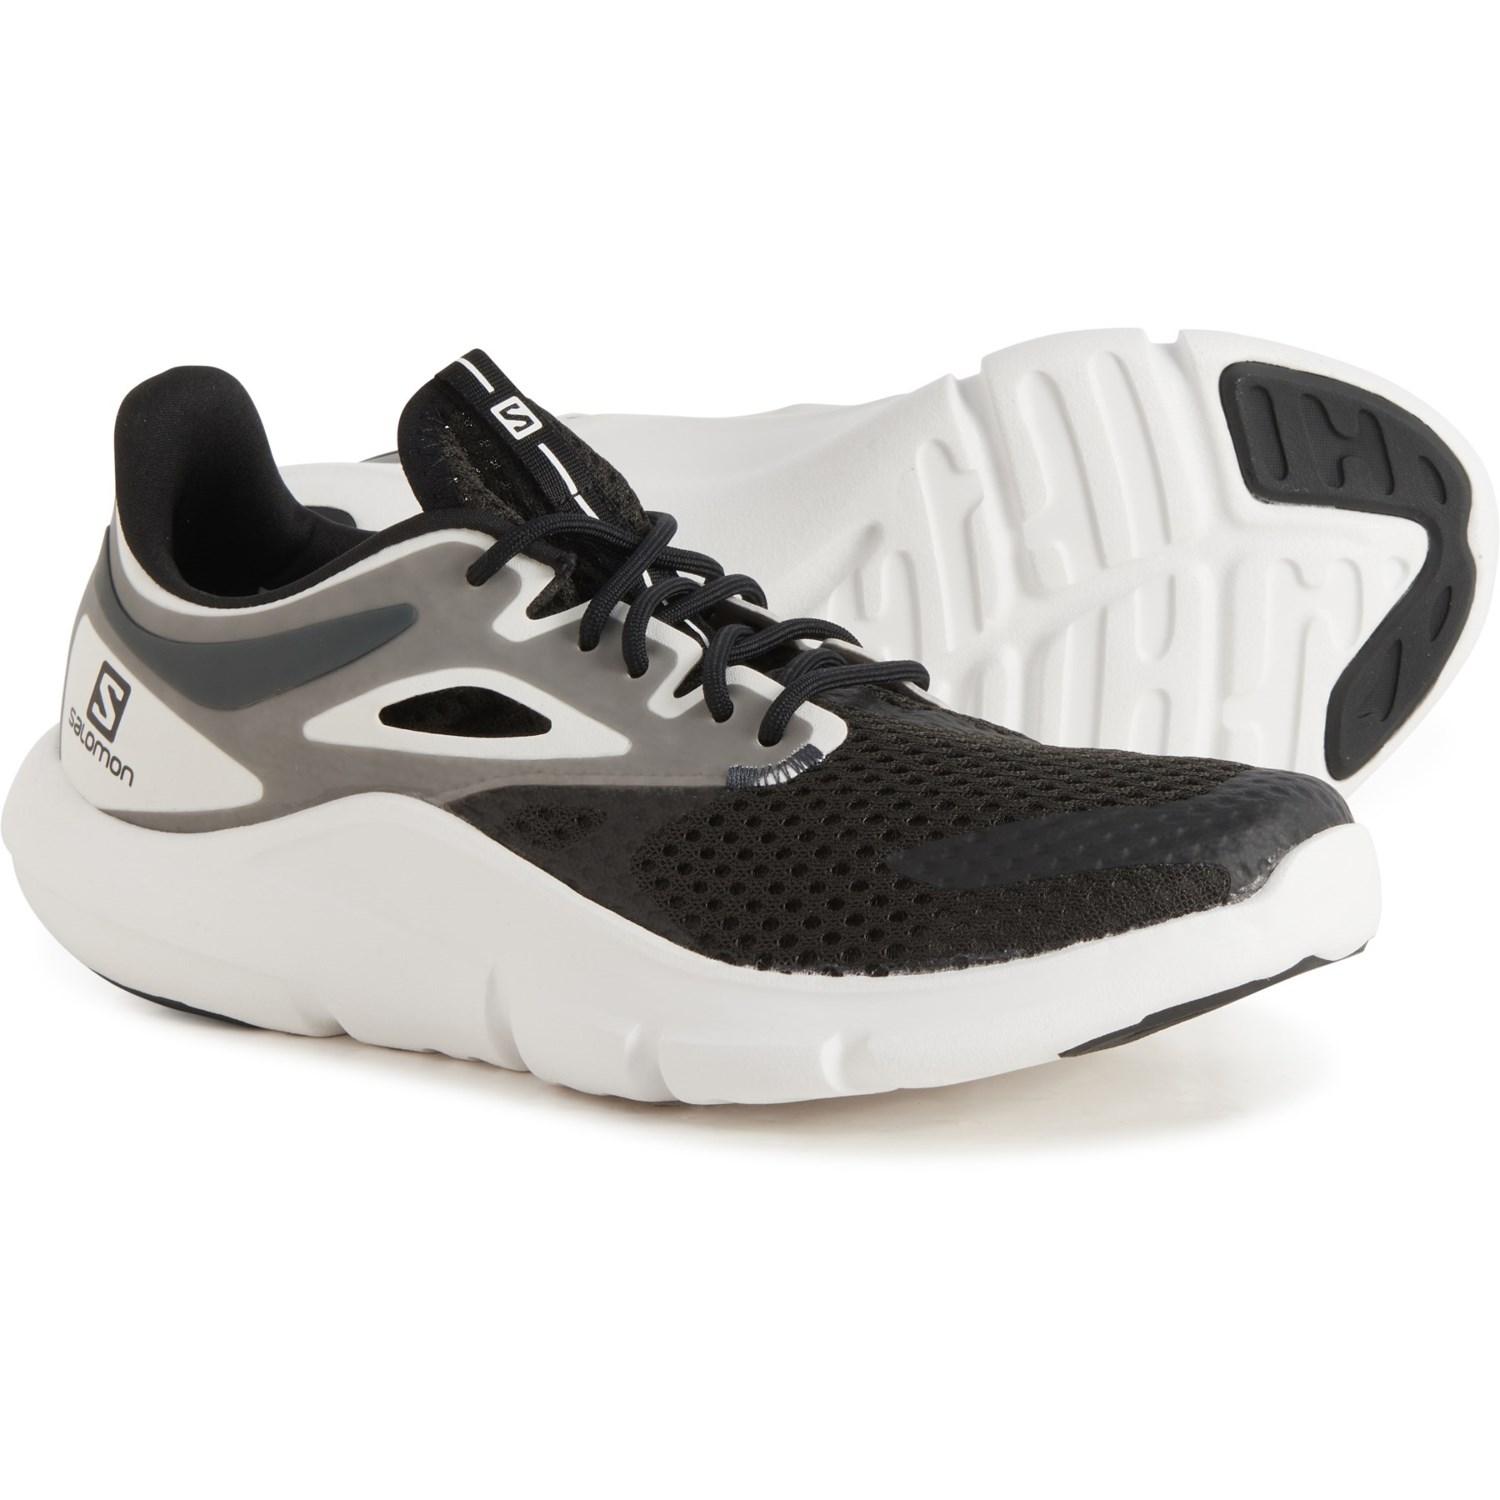 Salomon Rubber Predict Mod Running Shoes in Black/White (Black) | Lyst